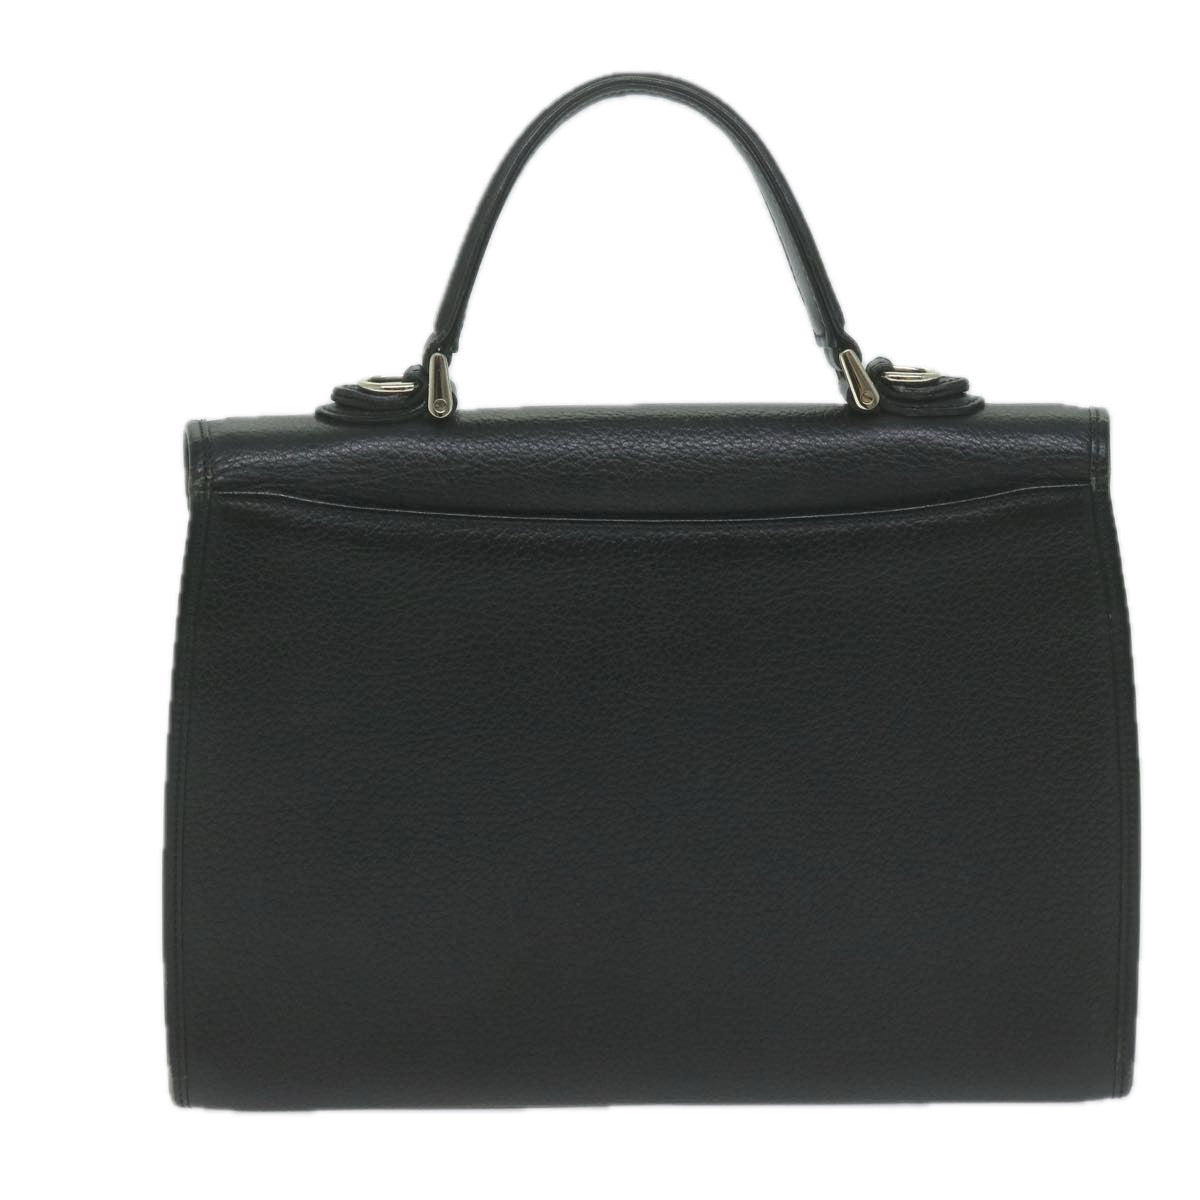 Burberrys Hand Bag Leather Black Auth am5643 - 0